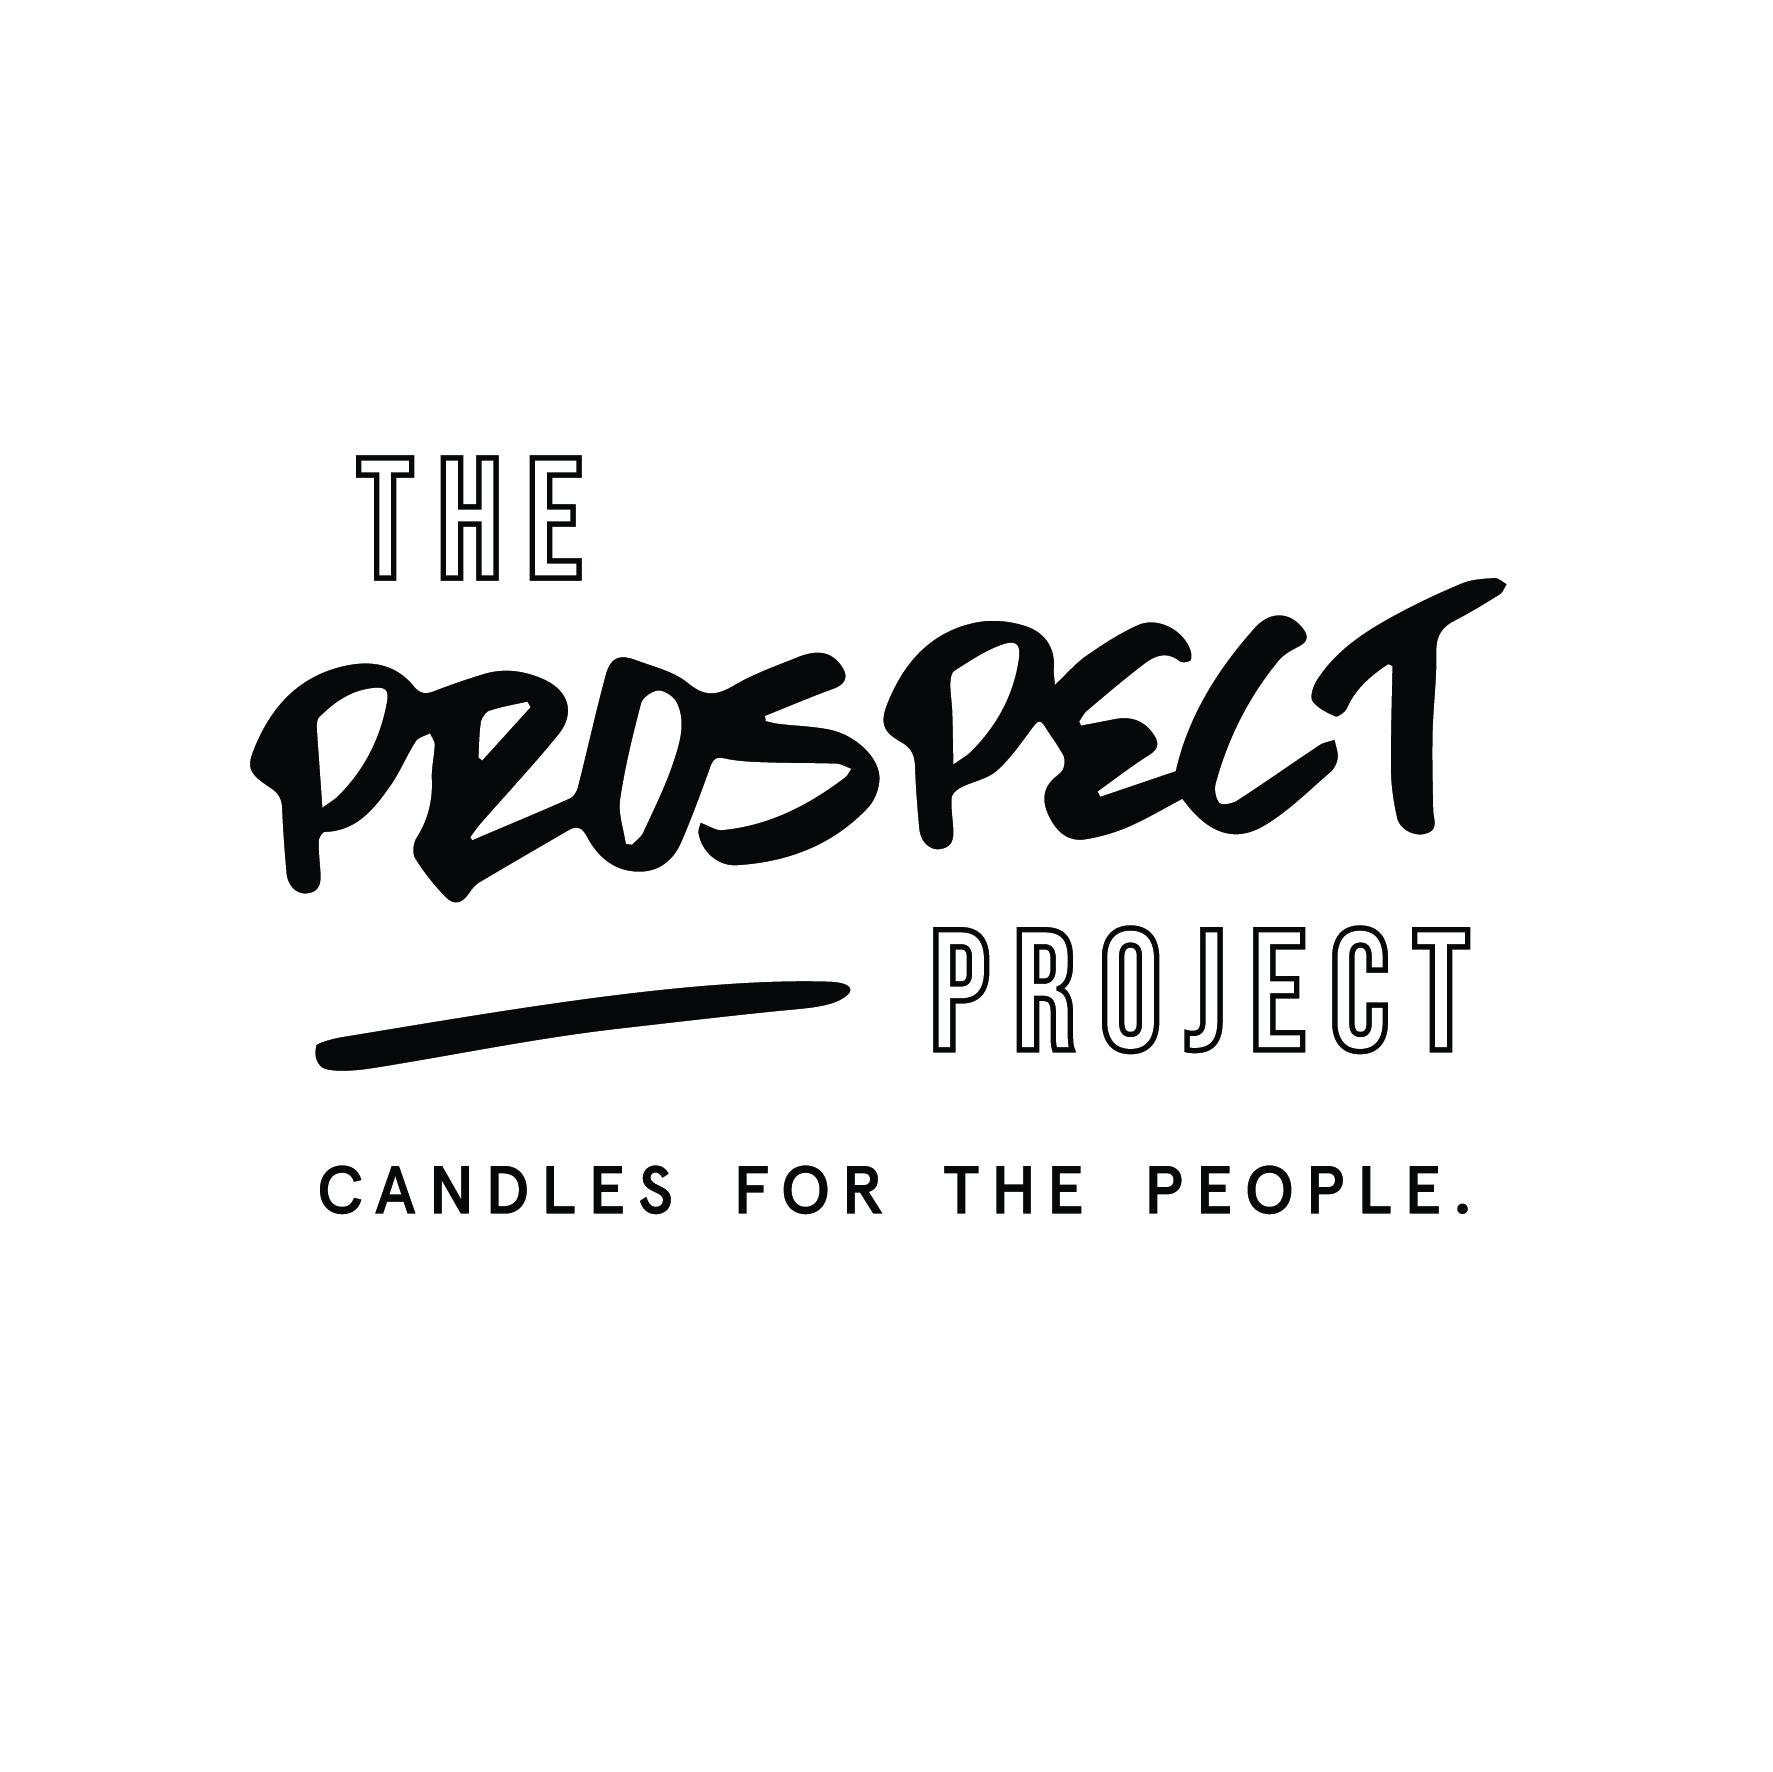 Citrus, Fresh, The Prospect Project Candles